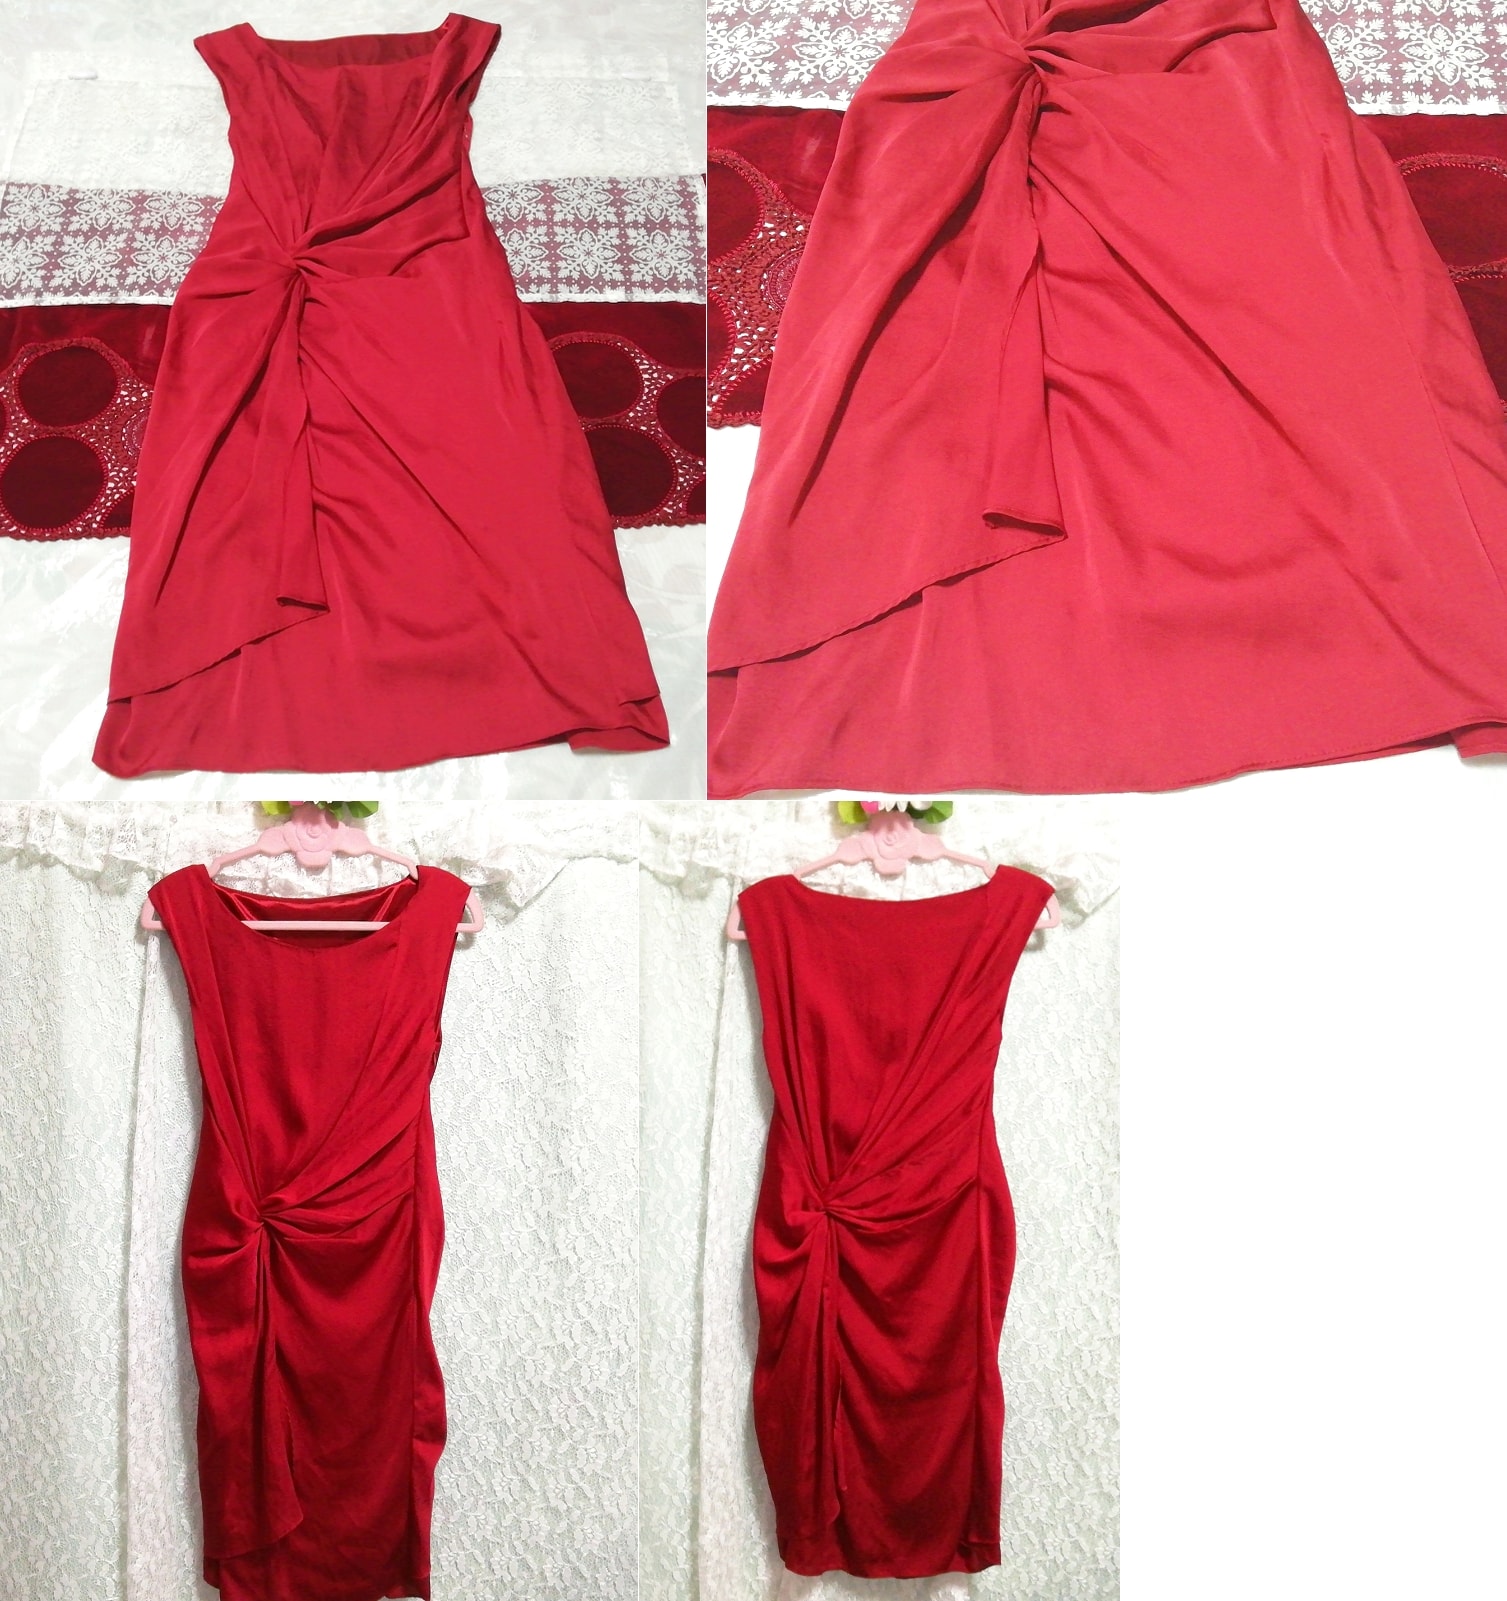 Red wine red satin sleeveless negligee nightgown nightwear half dress, knee length skirt, m size